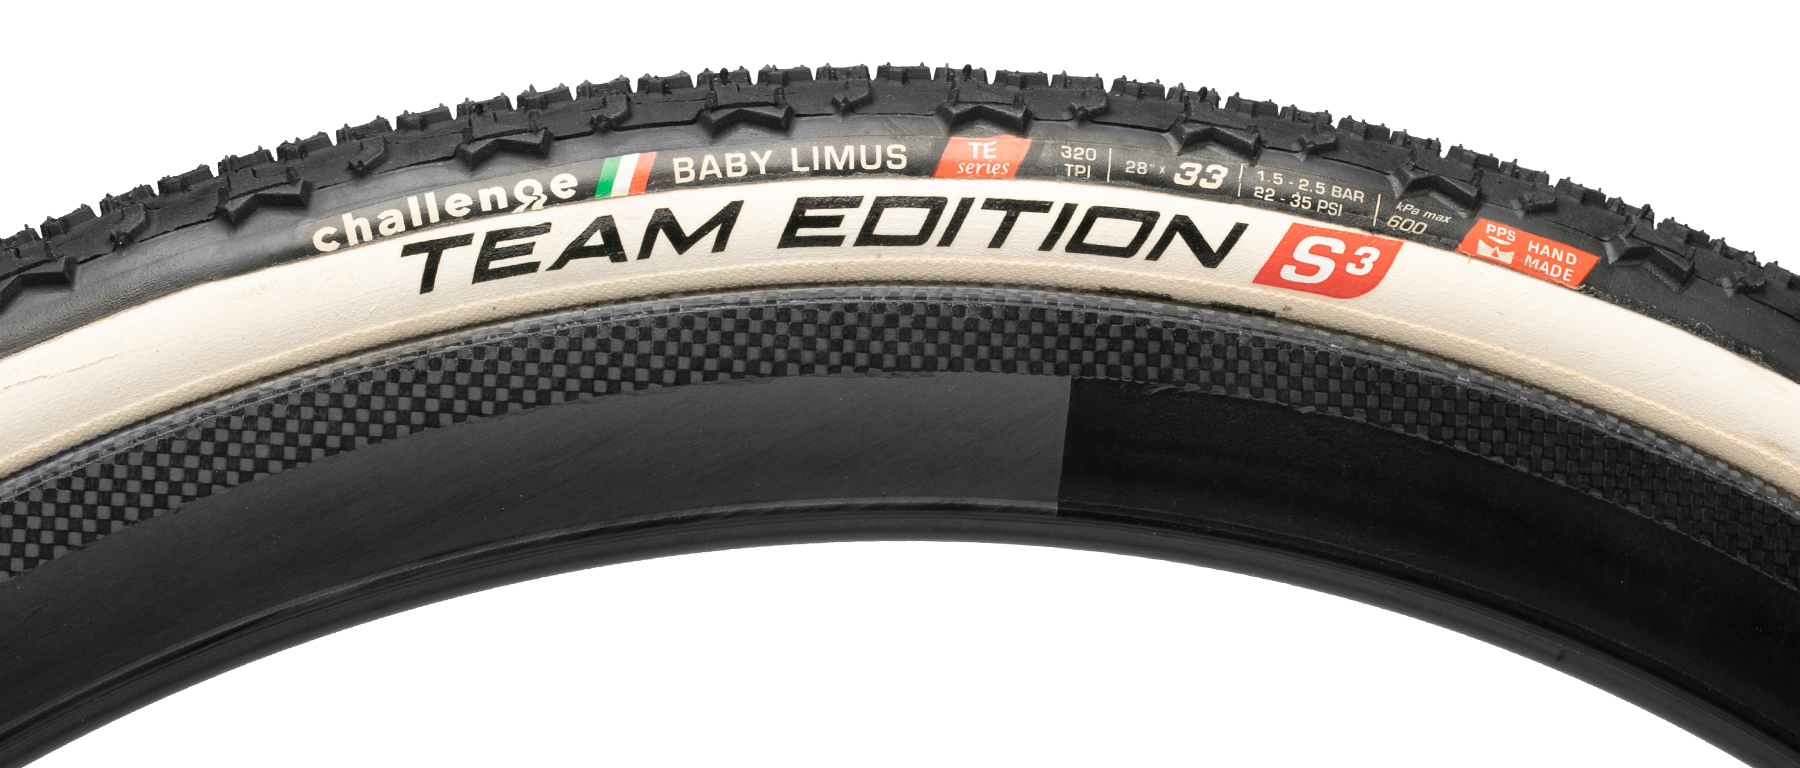 Challenge Baby Limus Team Edition Tubular Cyclocross Tire